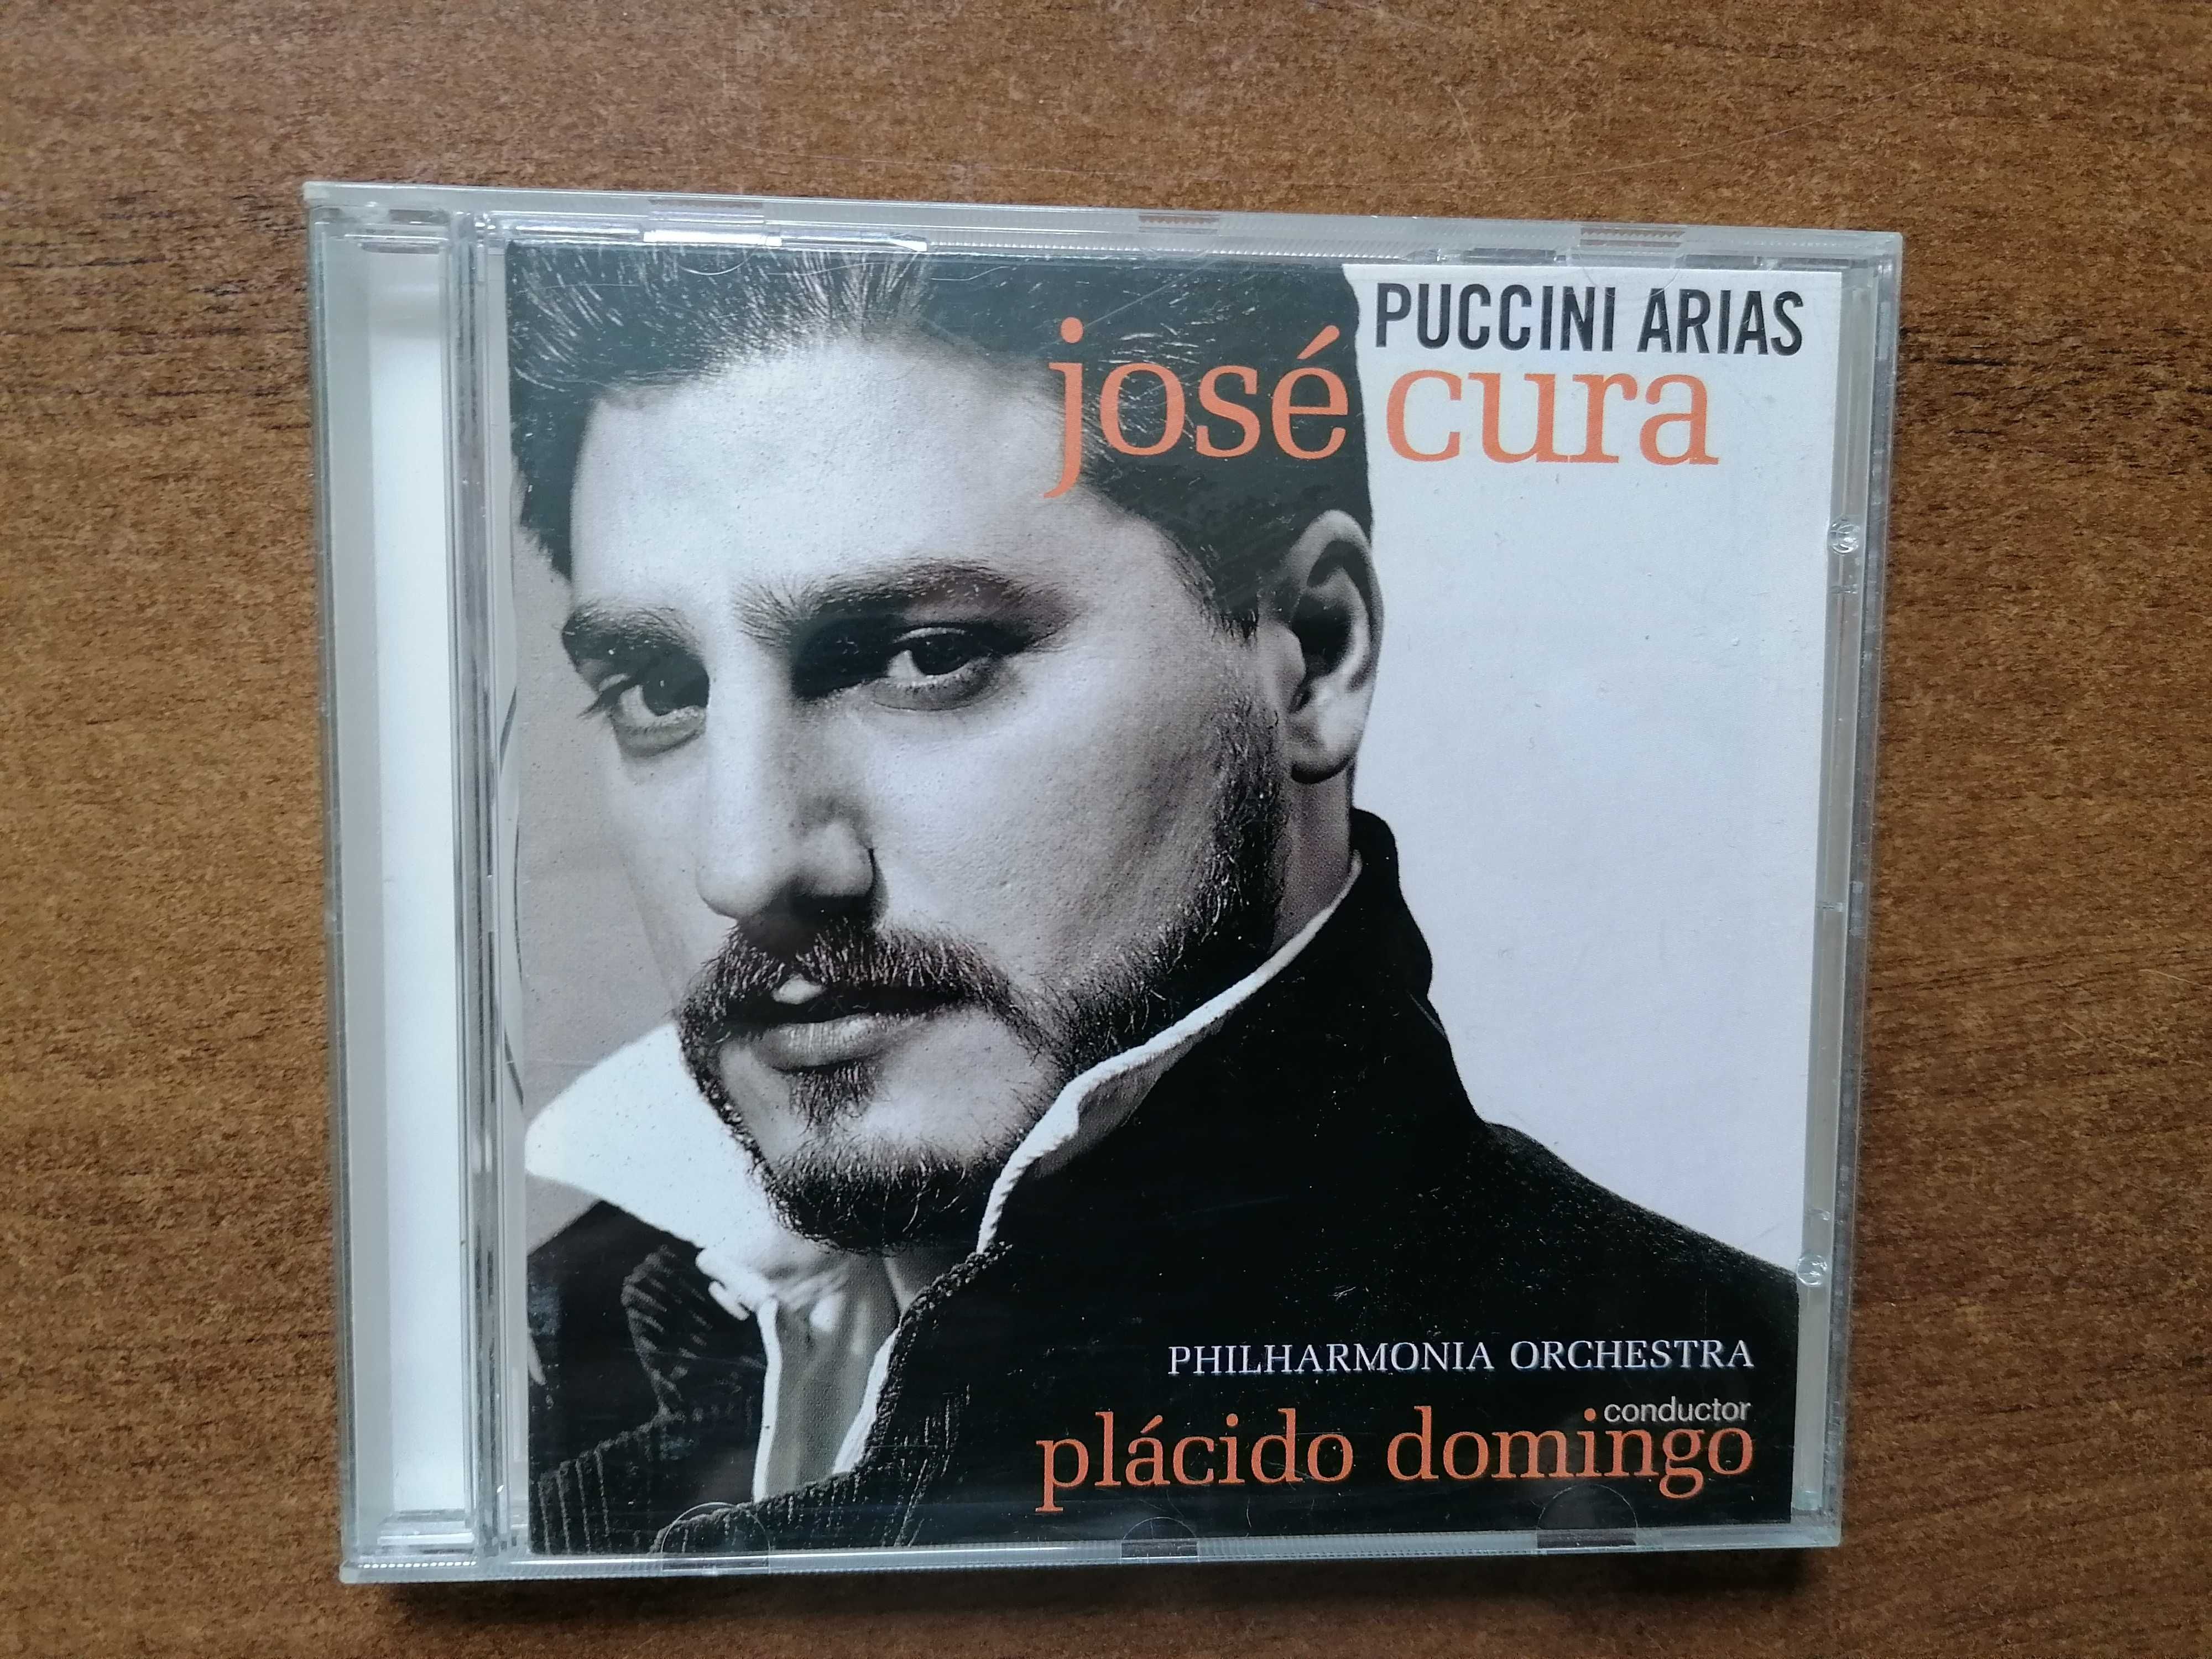 Jose Cura Puccini Arias